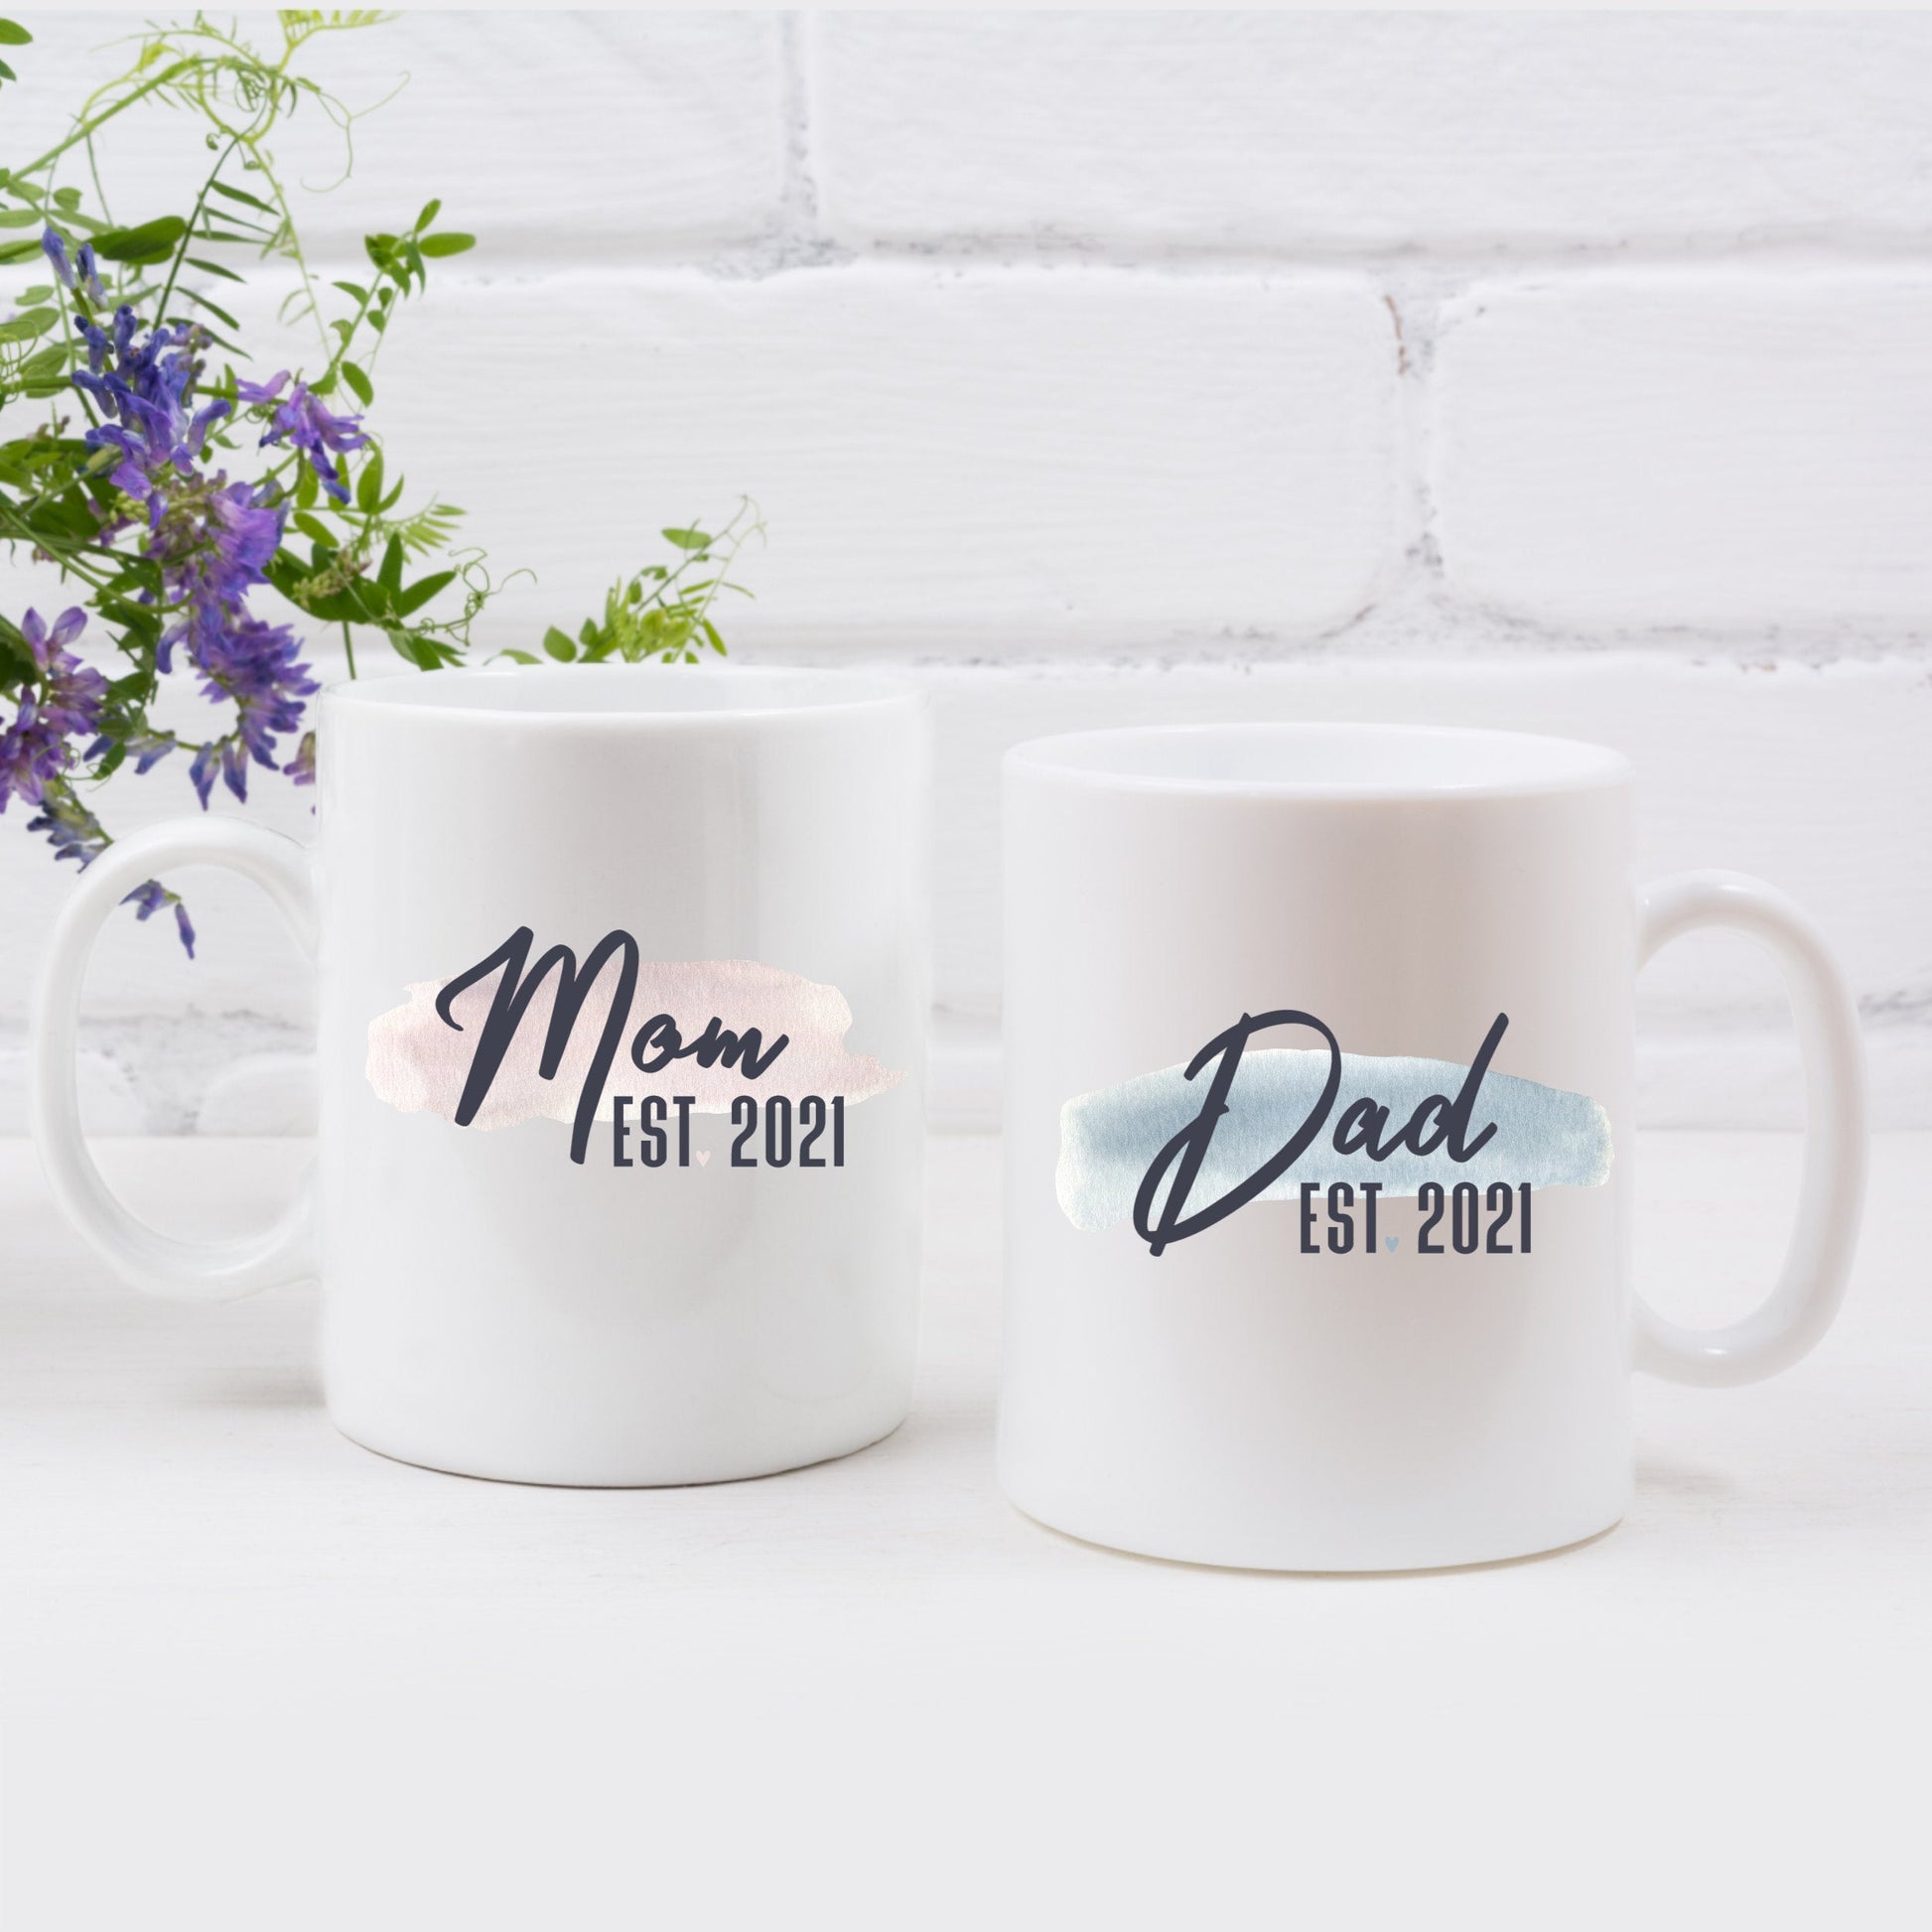 Dad Established 2021 Mug, New Dad Mug, New Parent Gift, Baby Announcement, New Parents Mug, Pregnancy Reveal, Gender Reveal, Father's Day - Premium Mug - Just $18.99! Shop now at Nine Thirty Nine Design